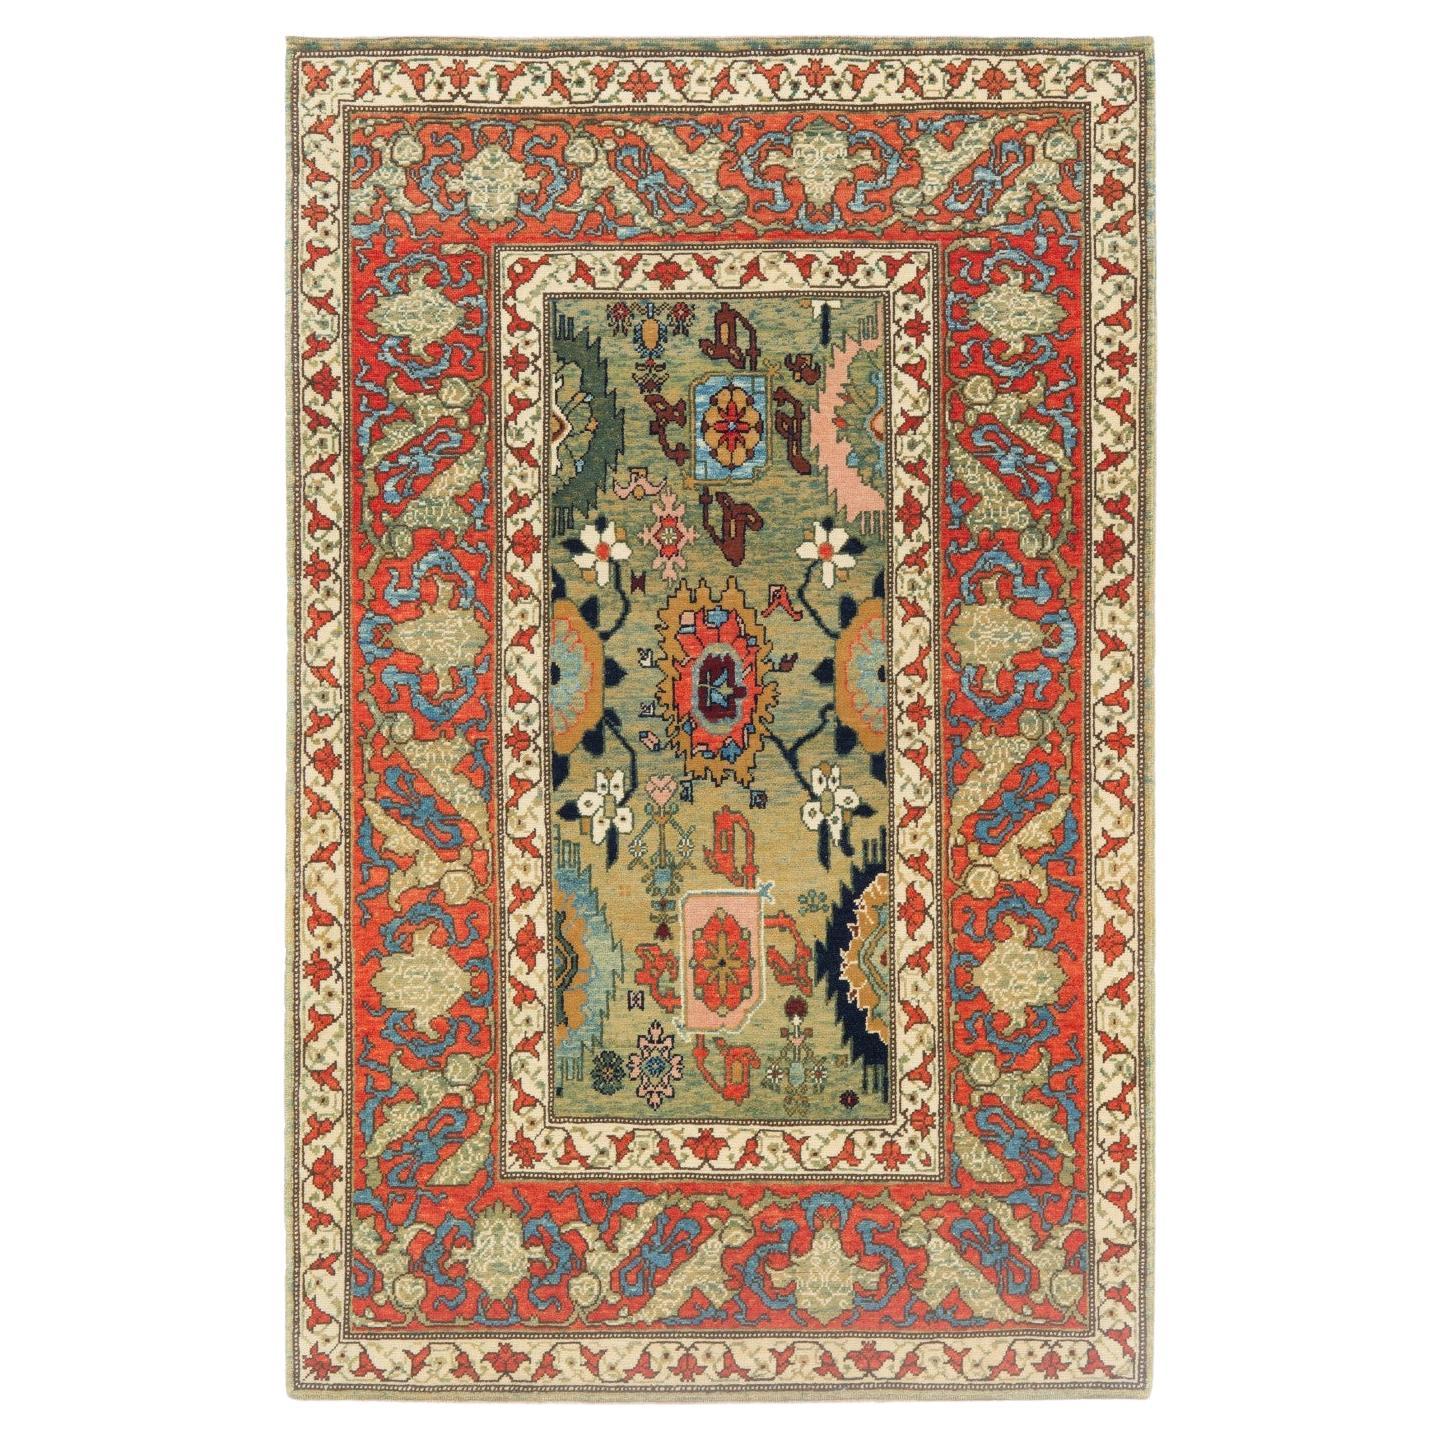 Ararat Rugs Palmettes and Flowers Lattice Rug Bidjar Revival Carpet Natural Dyed For Sale